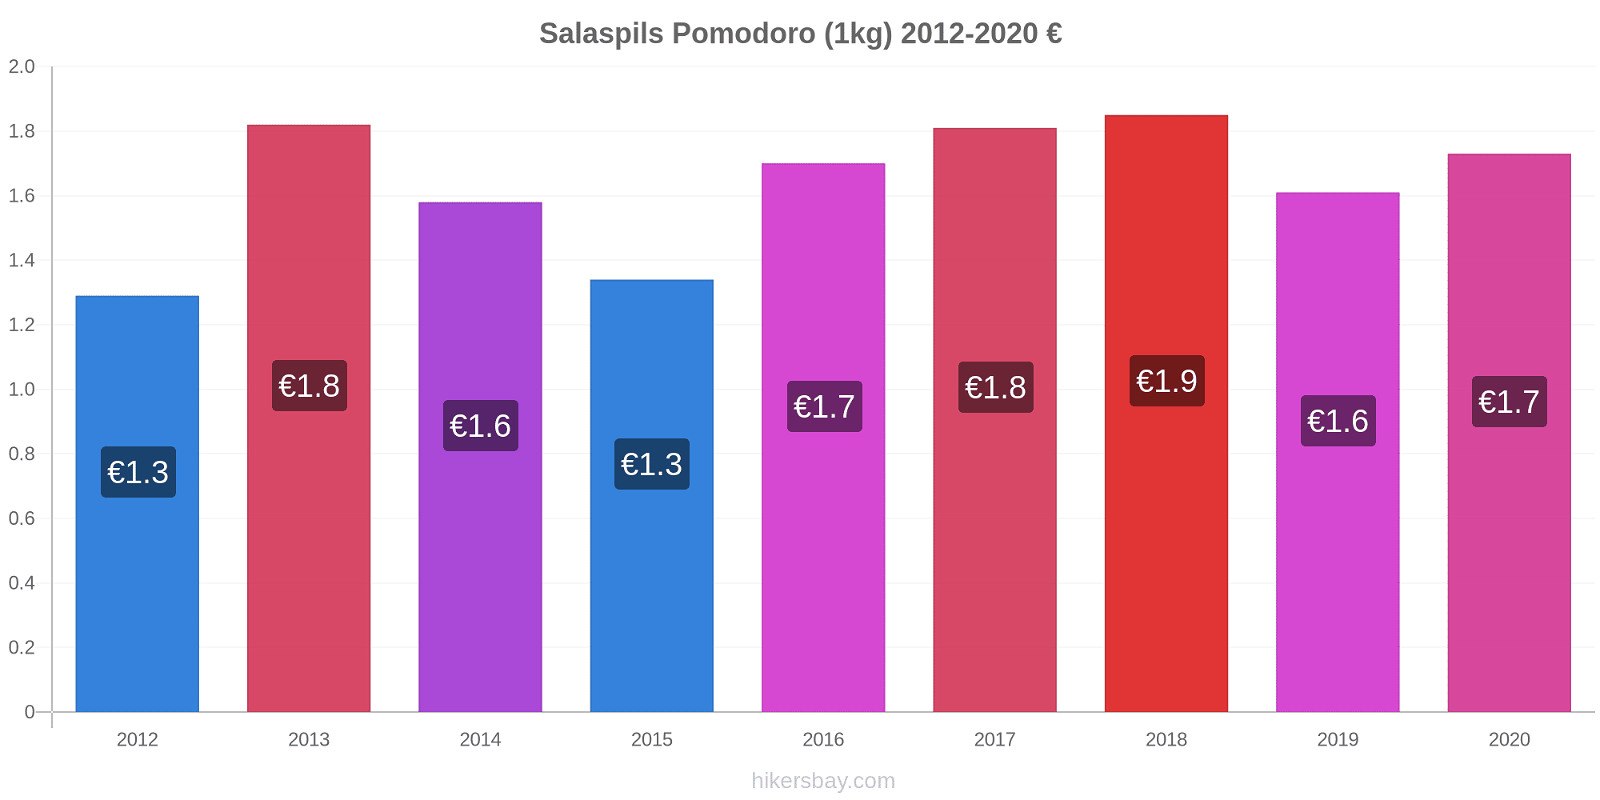 Salaspils variazioni di prezzo Pomodoro (1kg) hikersbay.com